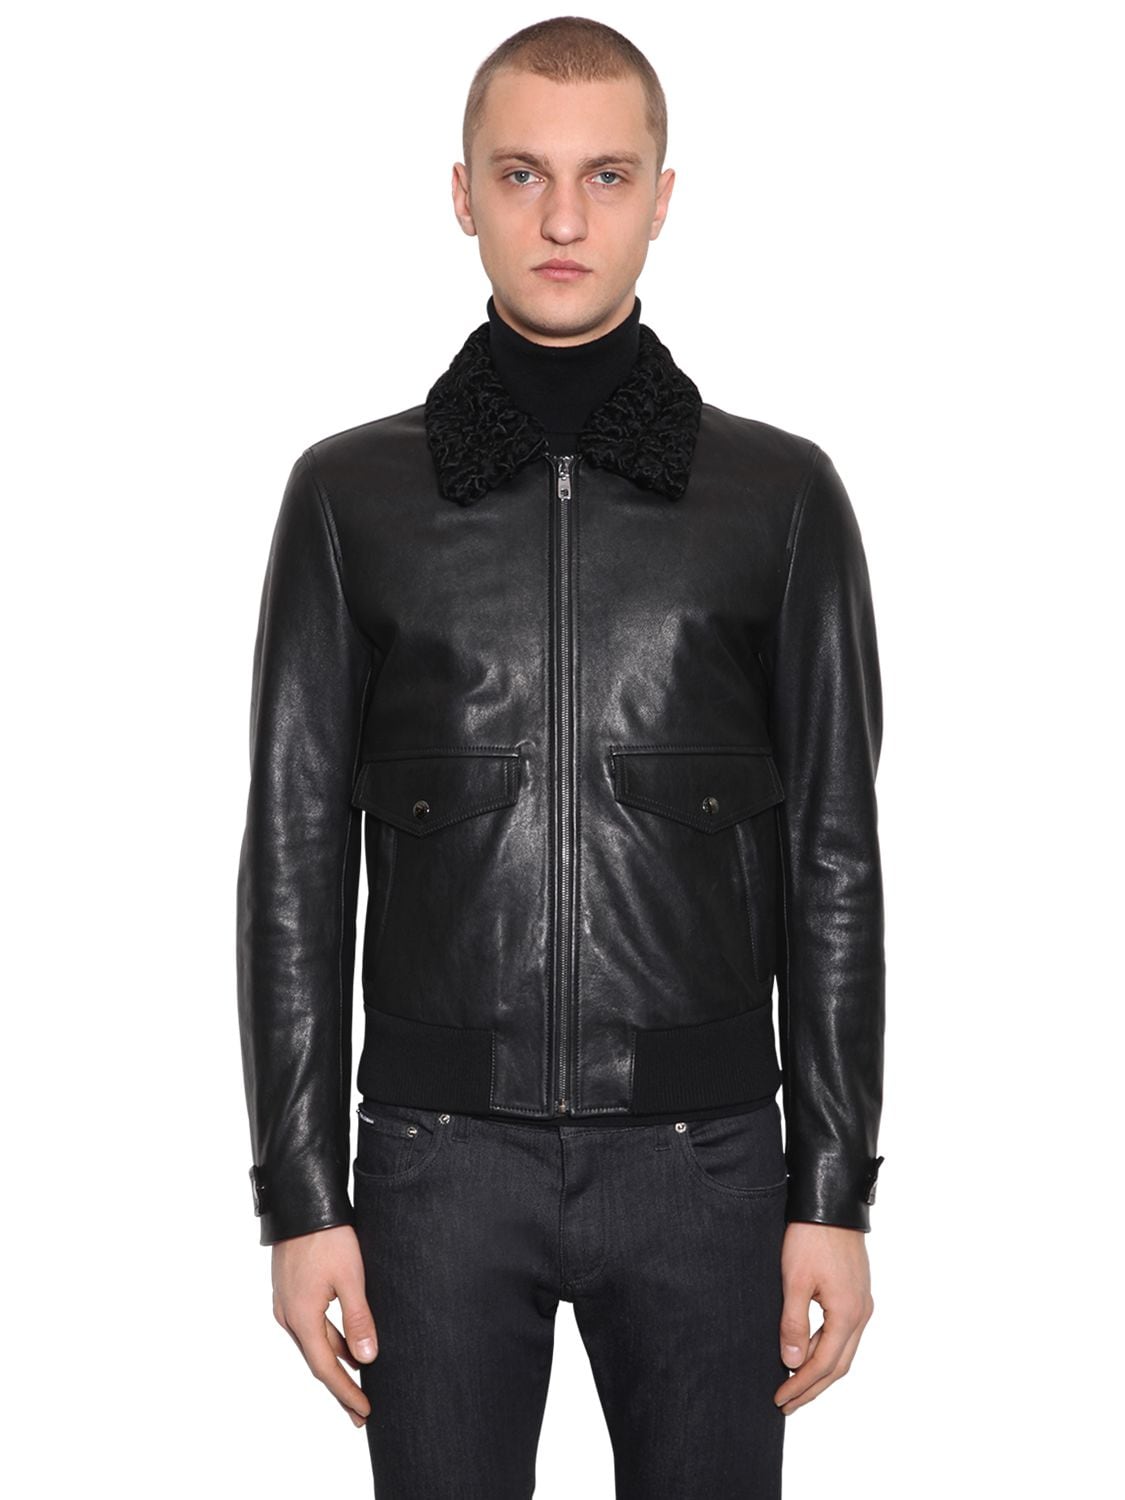 Astracan Leather Blouson Jacket